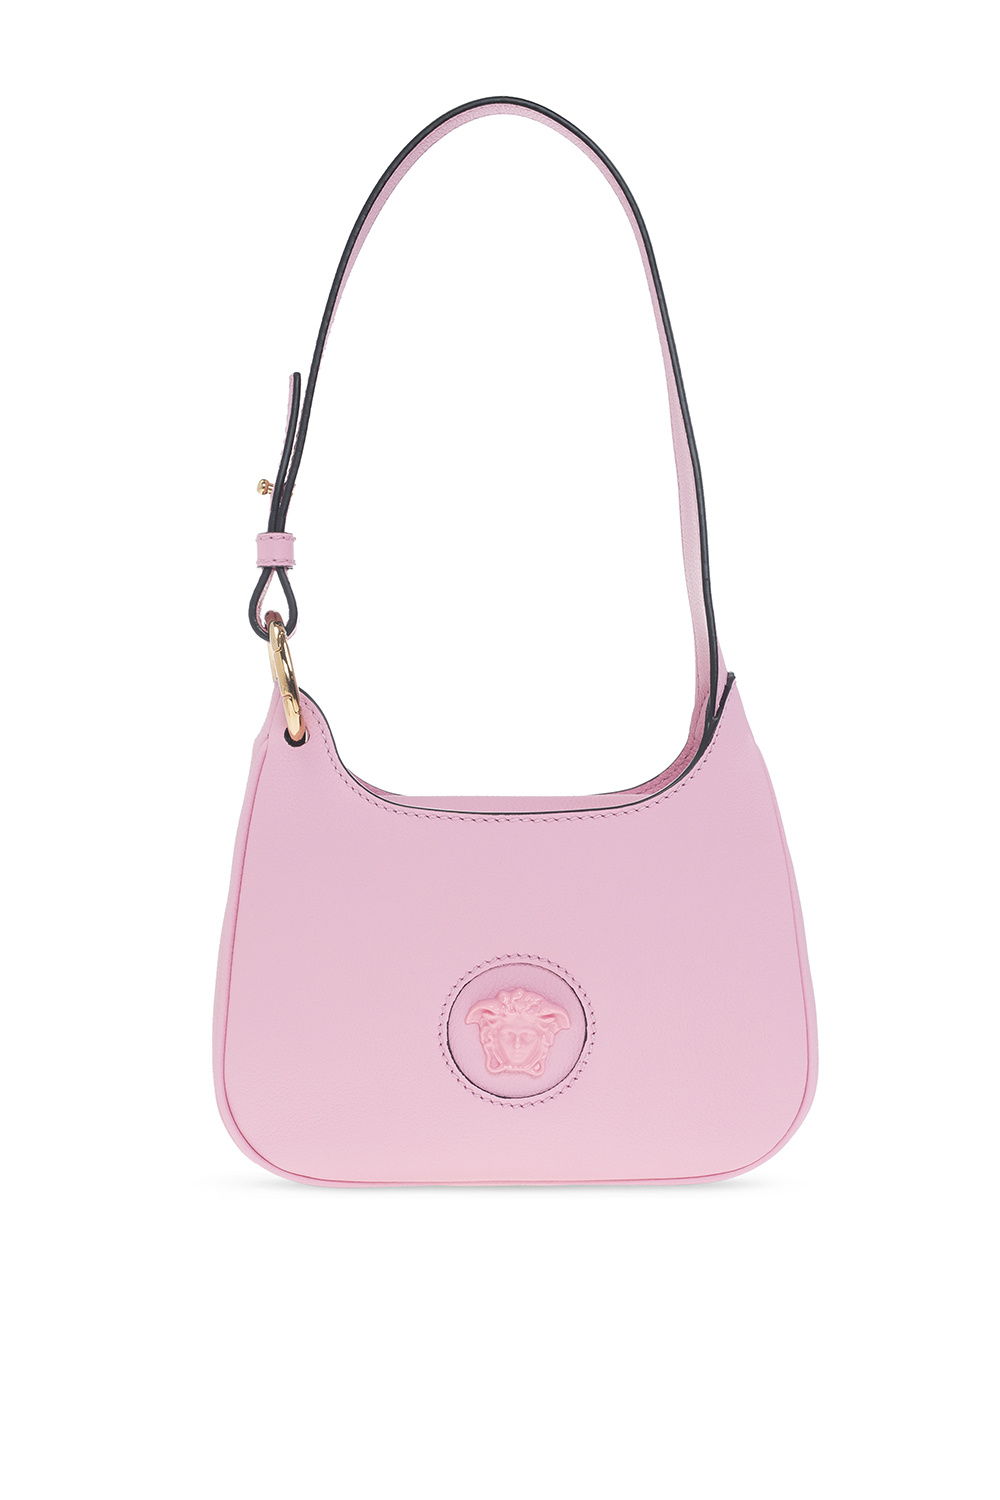 Versace Pink Small La Medusa Handbag